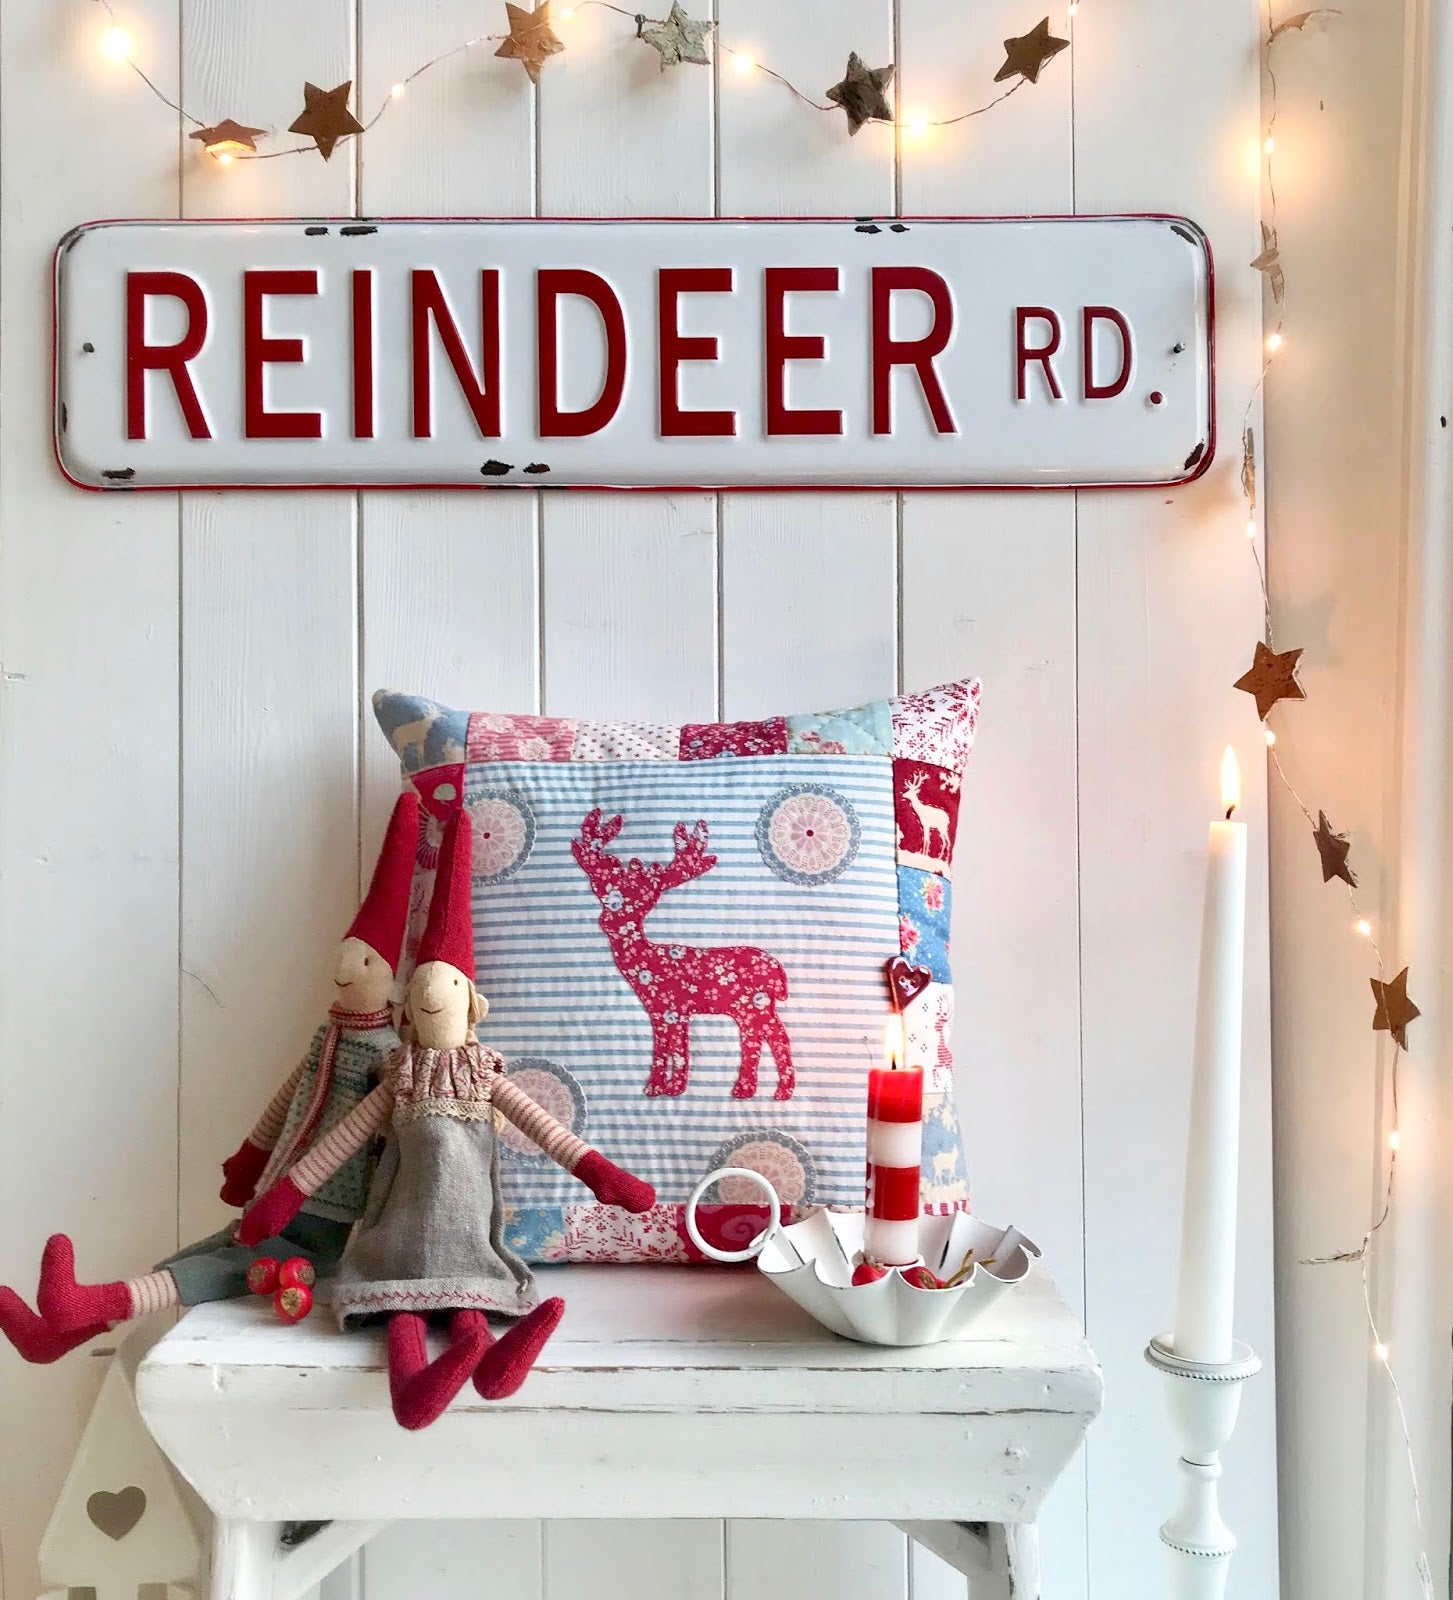 56cm Reindeer Rd Sign